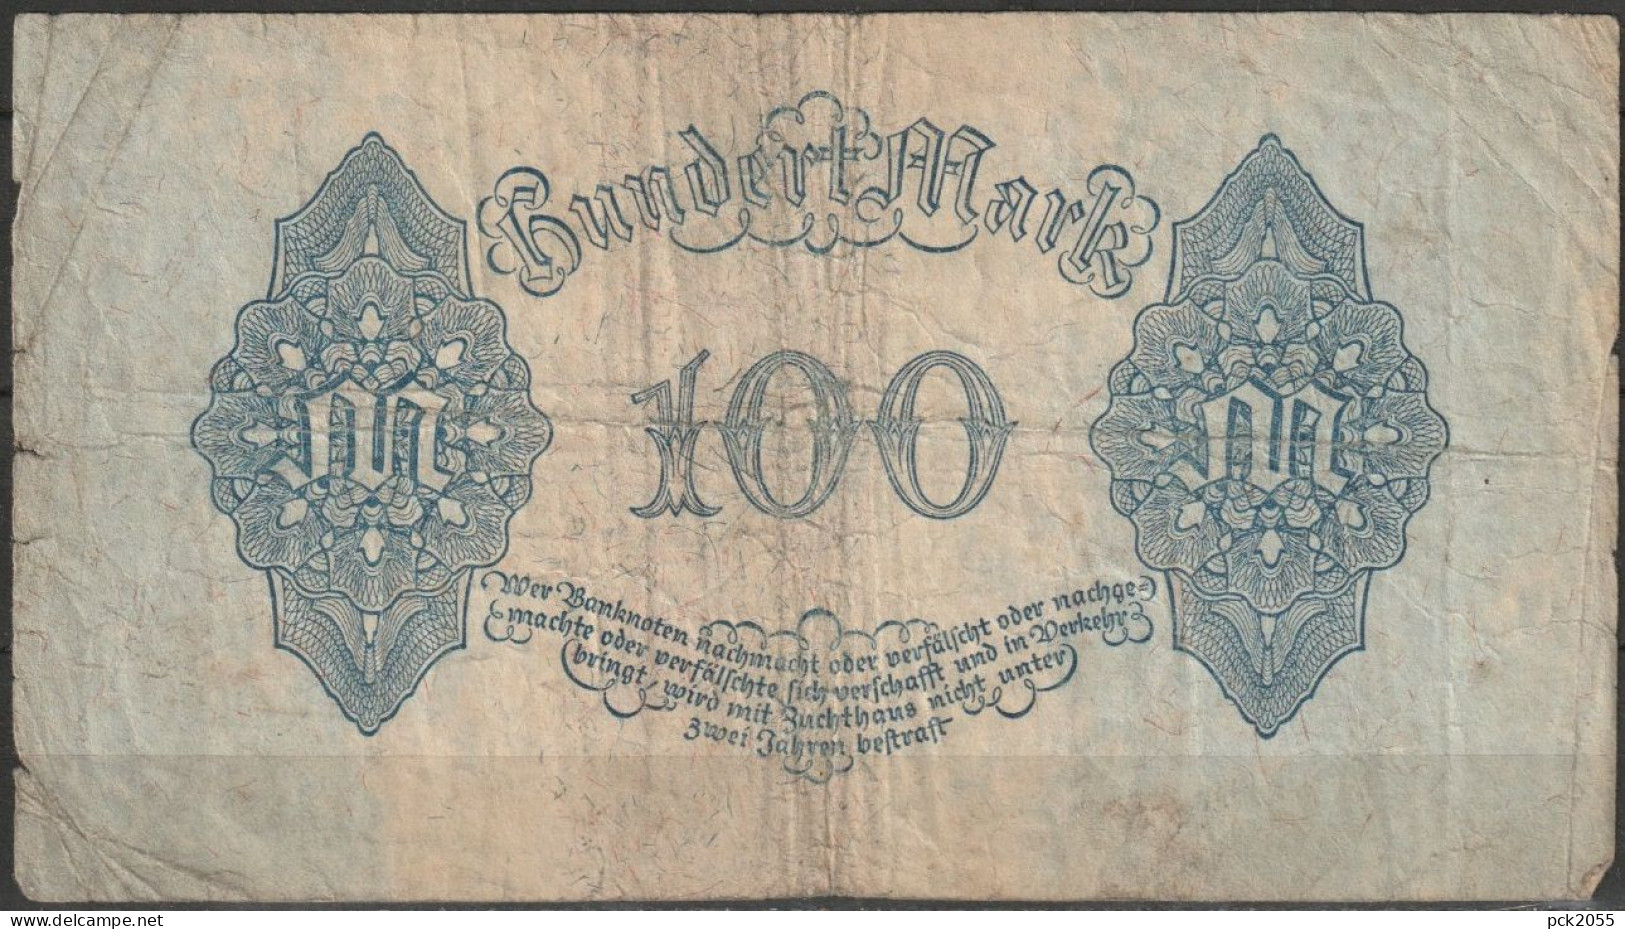 DR.100 Mark Reichsbanknote 4.8.1922 Ros.Nr.72, P75 ( D 6494 ) - 100 Mark